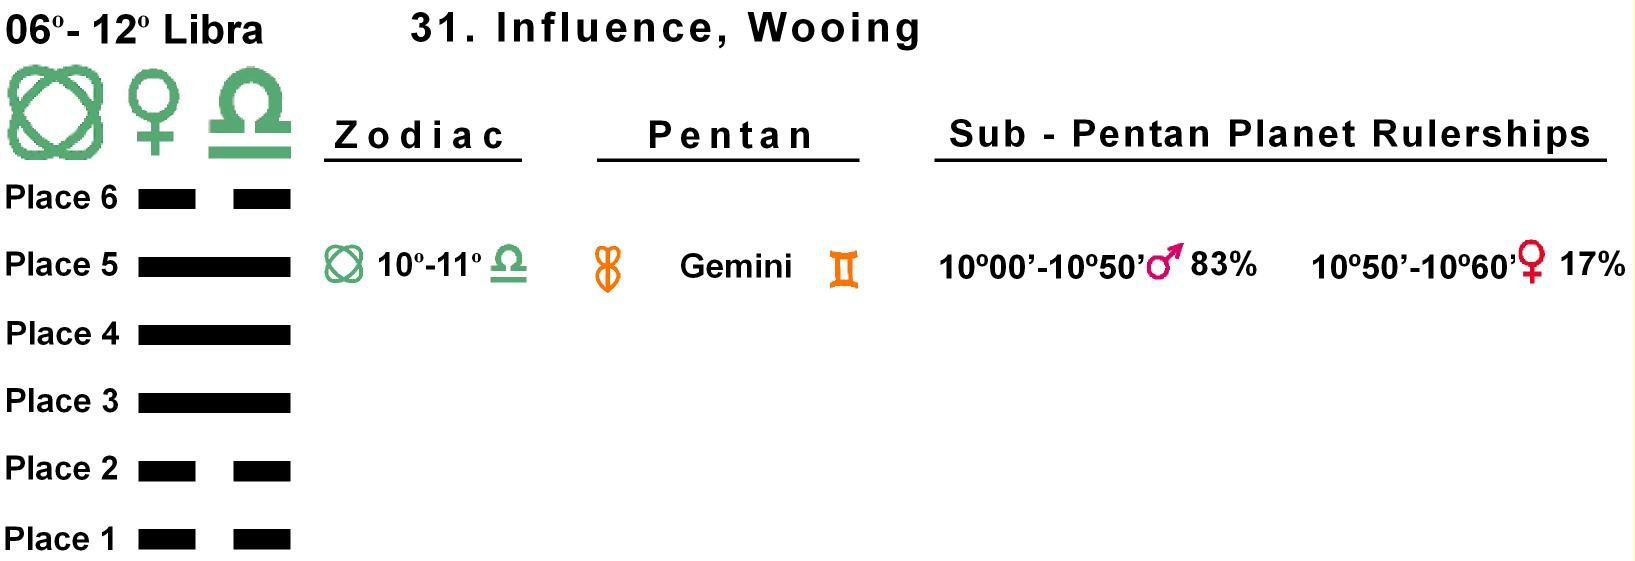 Pent-lines-07LI 10-11 Hx-31 Influence Wooing